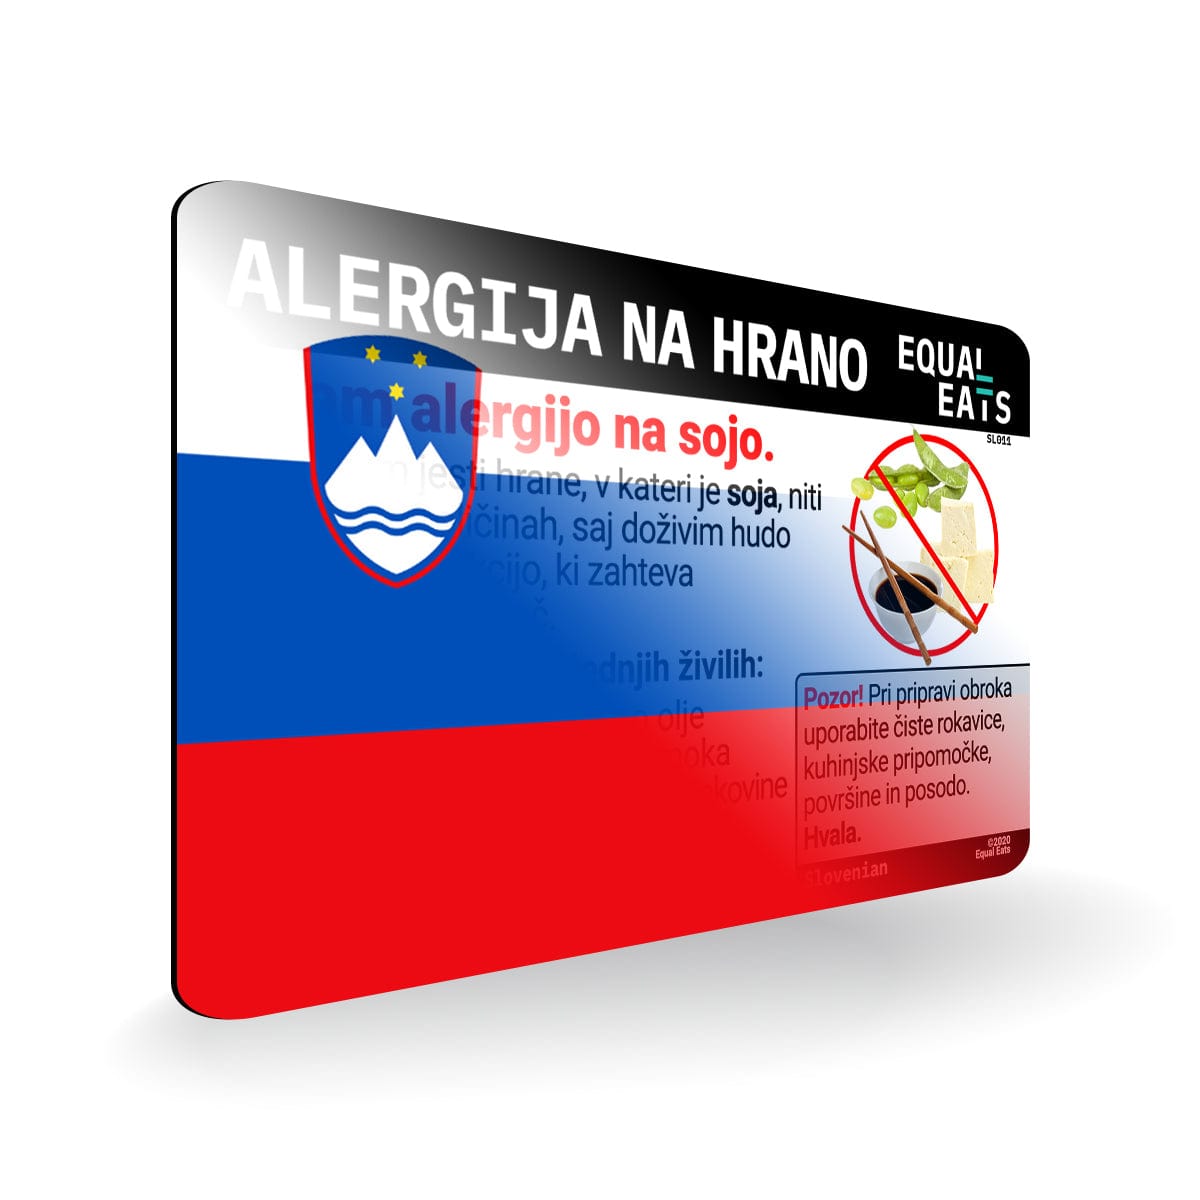 Soy Allergy in Slovenian. Soy Allergy Card for Slovenia